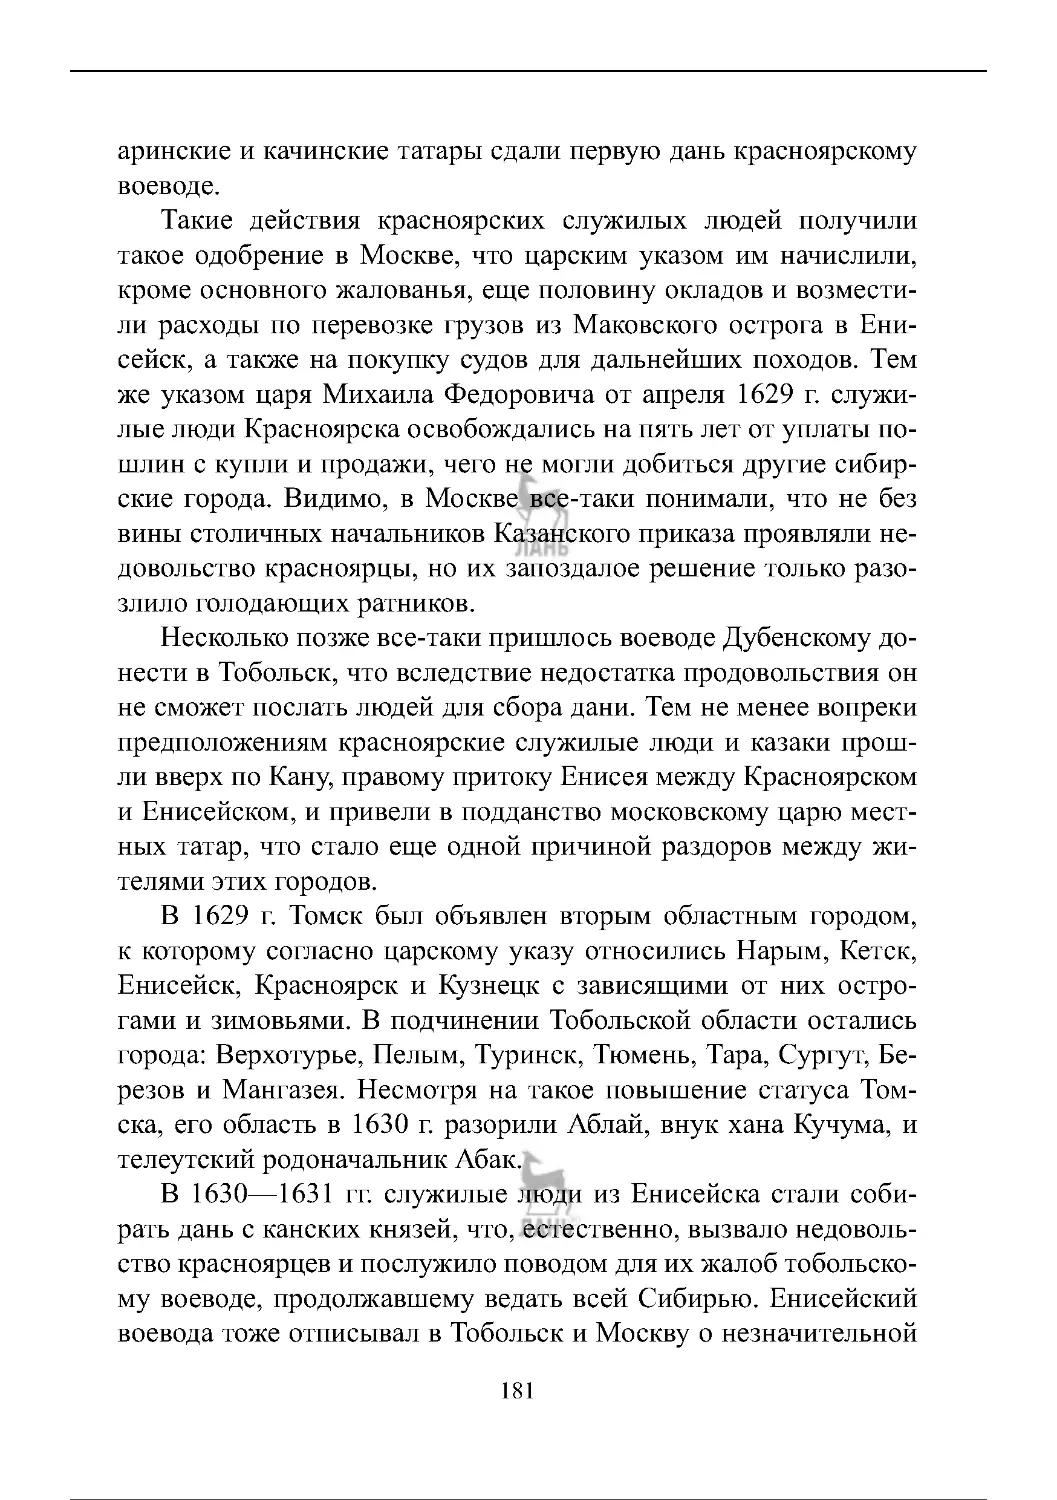 istoria_zavoevania_i_kolonizacii_sibiri_181-240